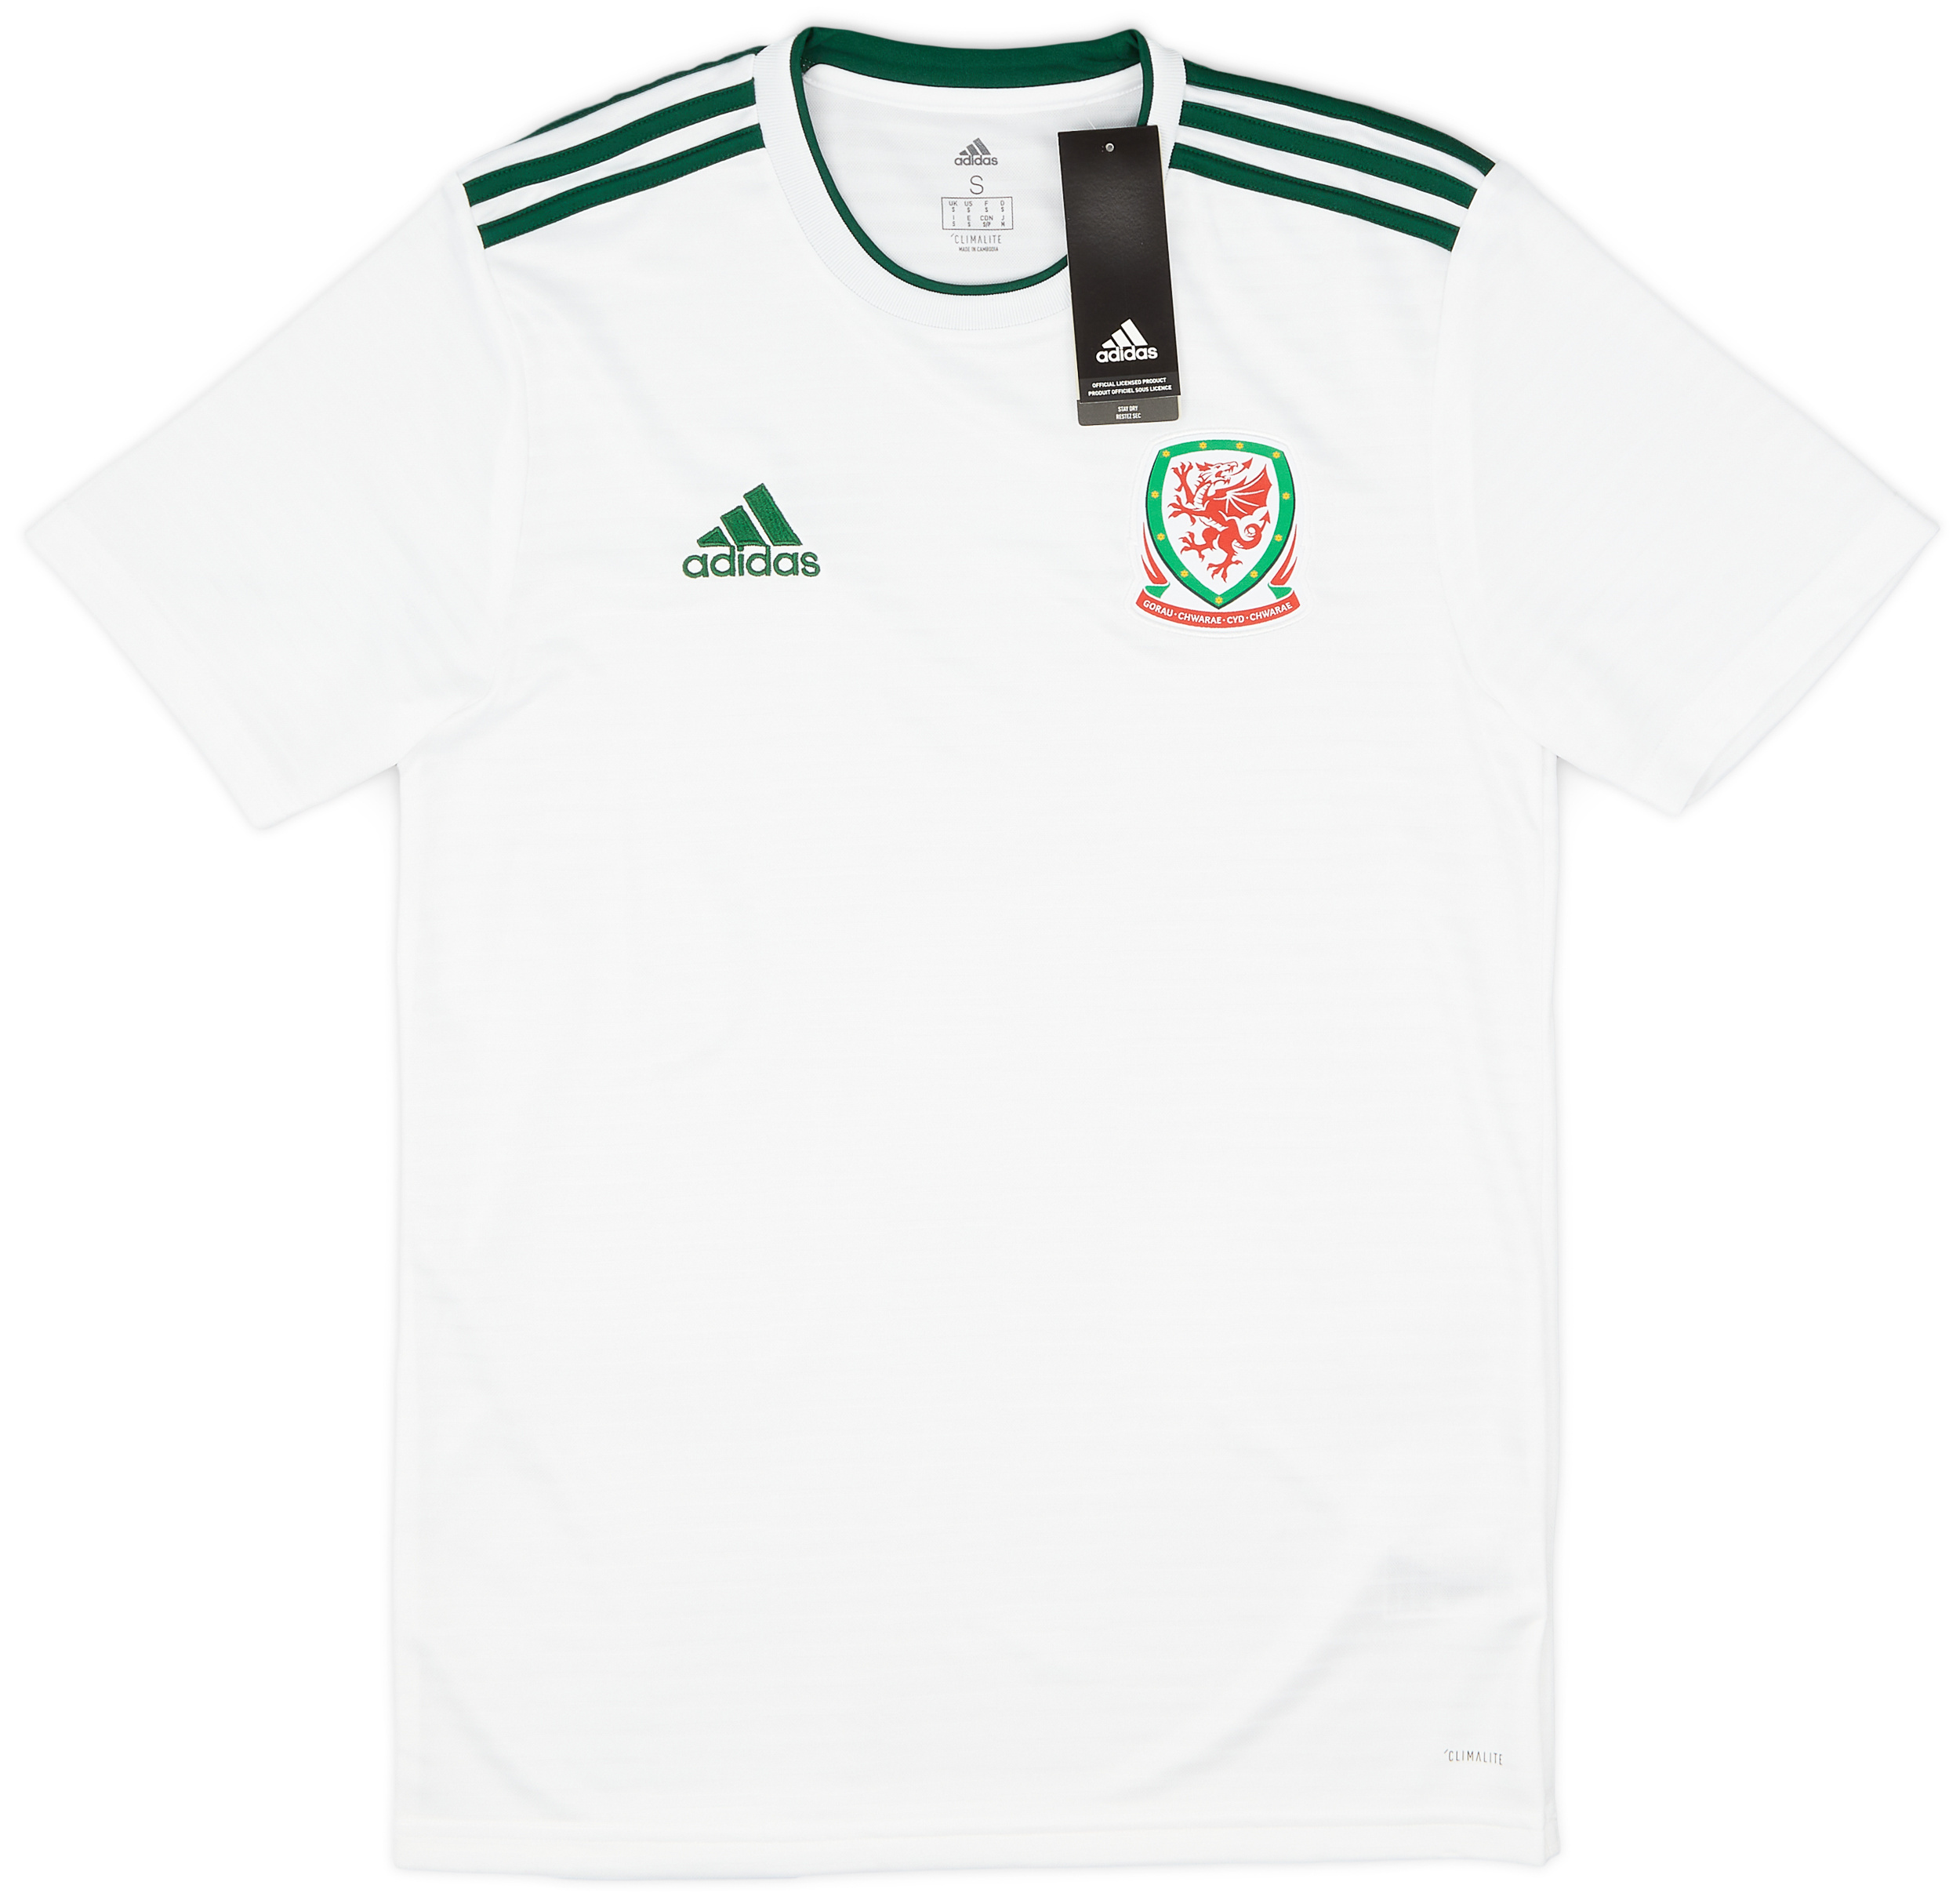 Wales  Fora camisa (Original)